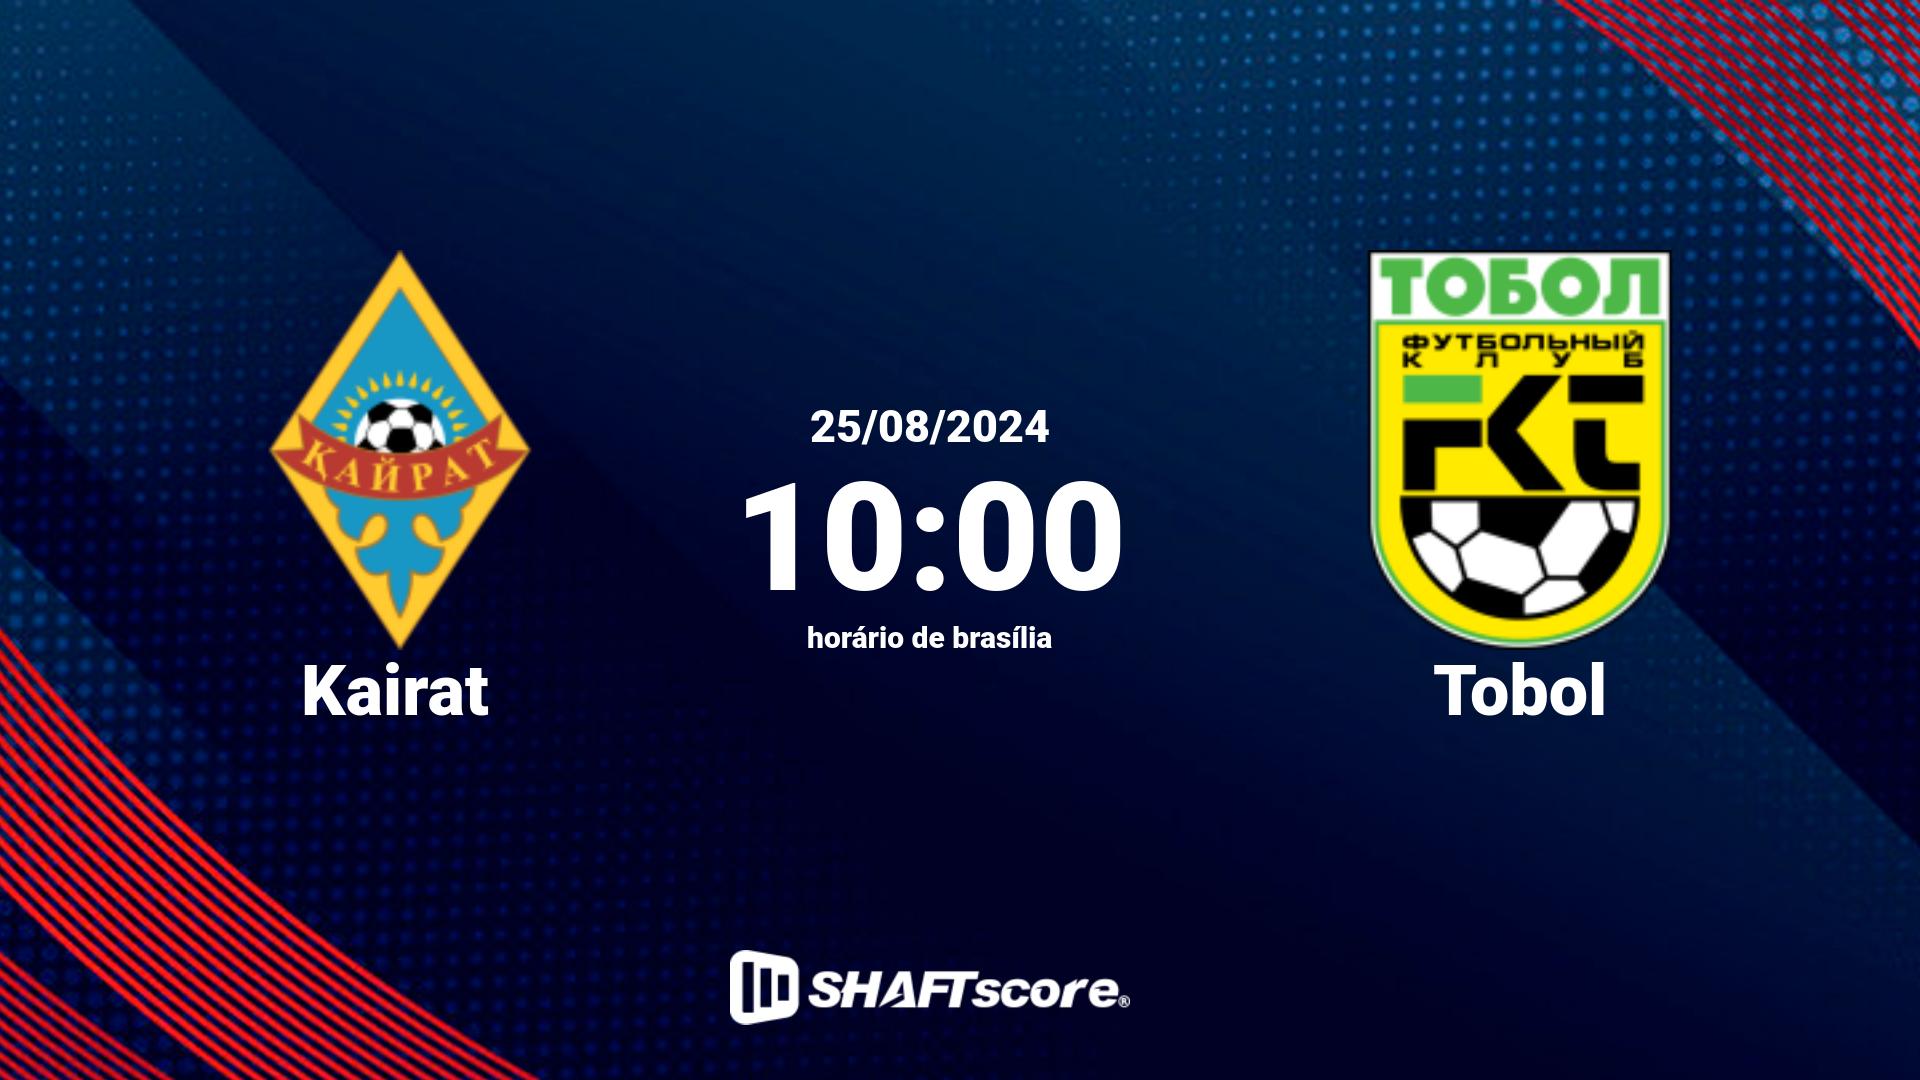 Estatísticas do jogo Kairat vs Tobol 25.08 10:00